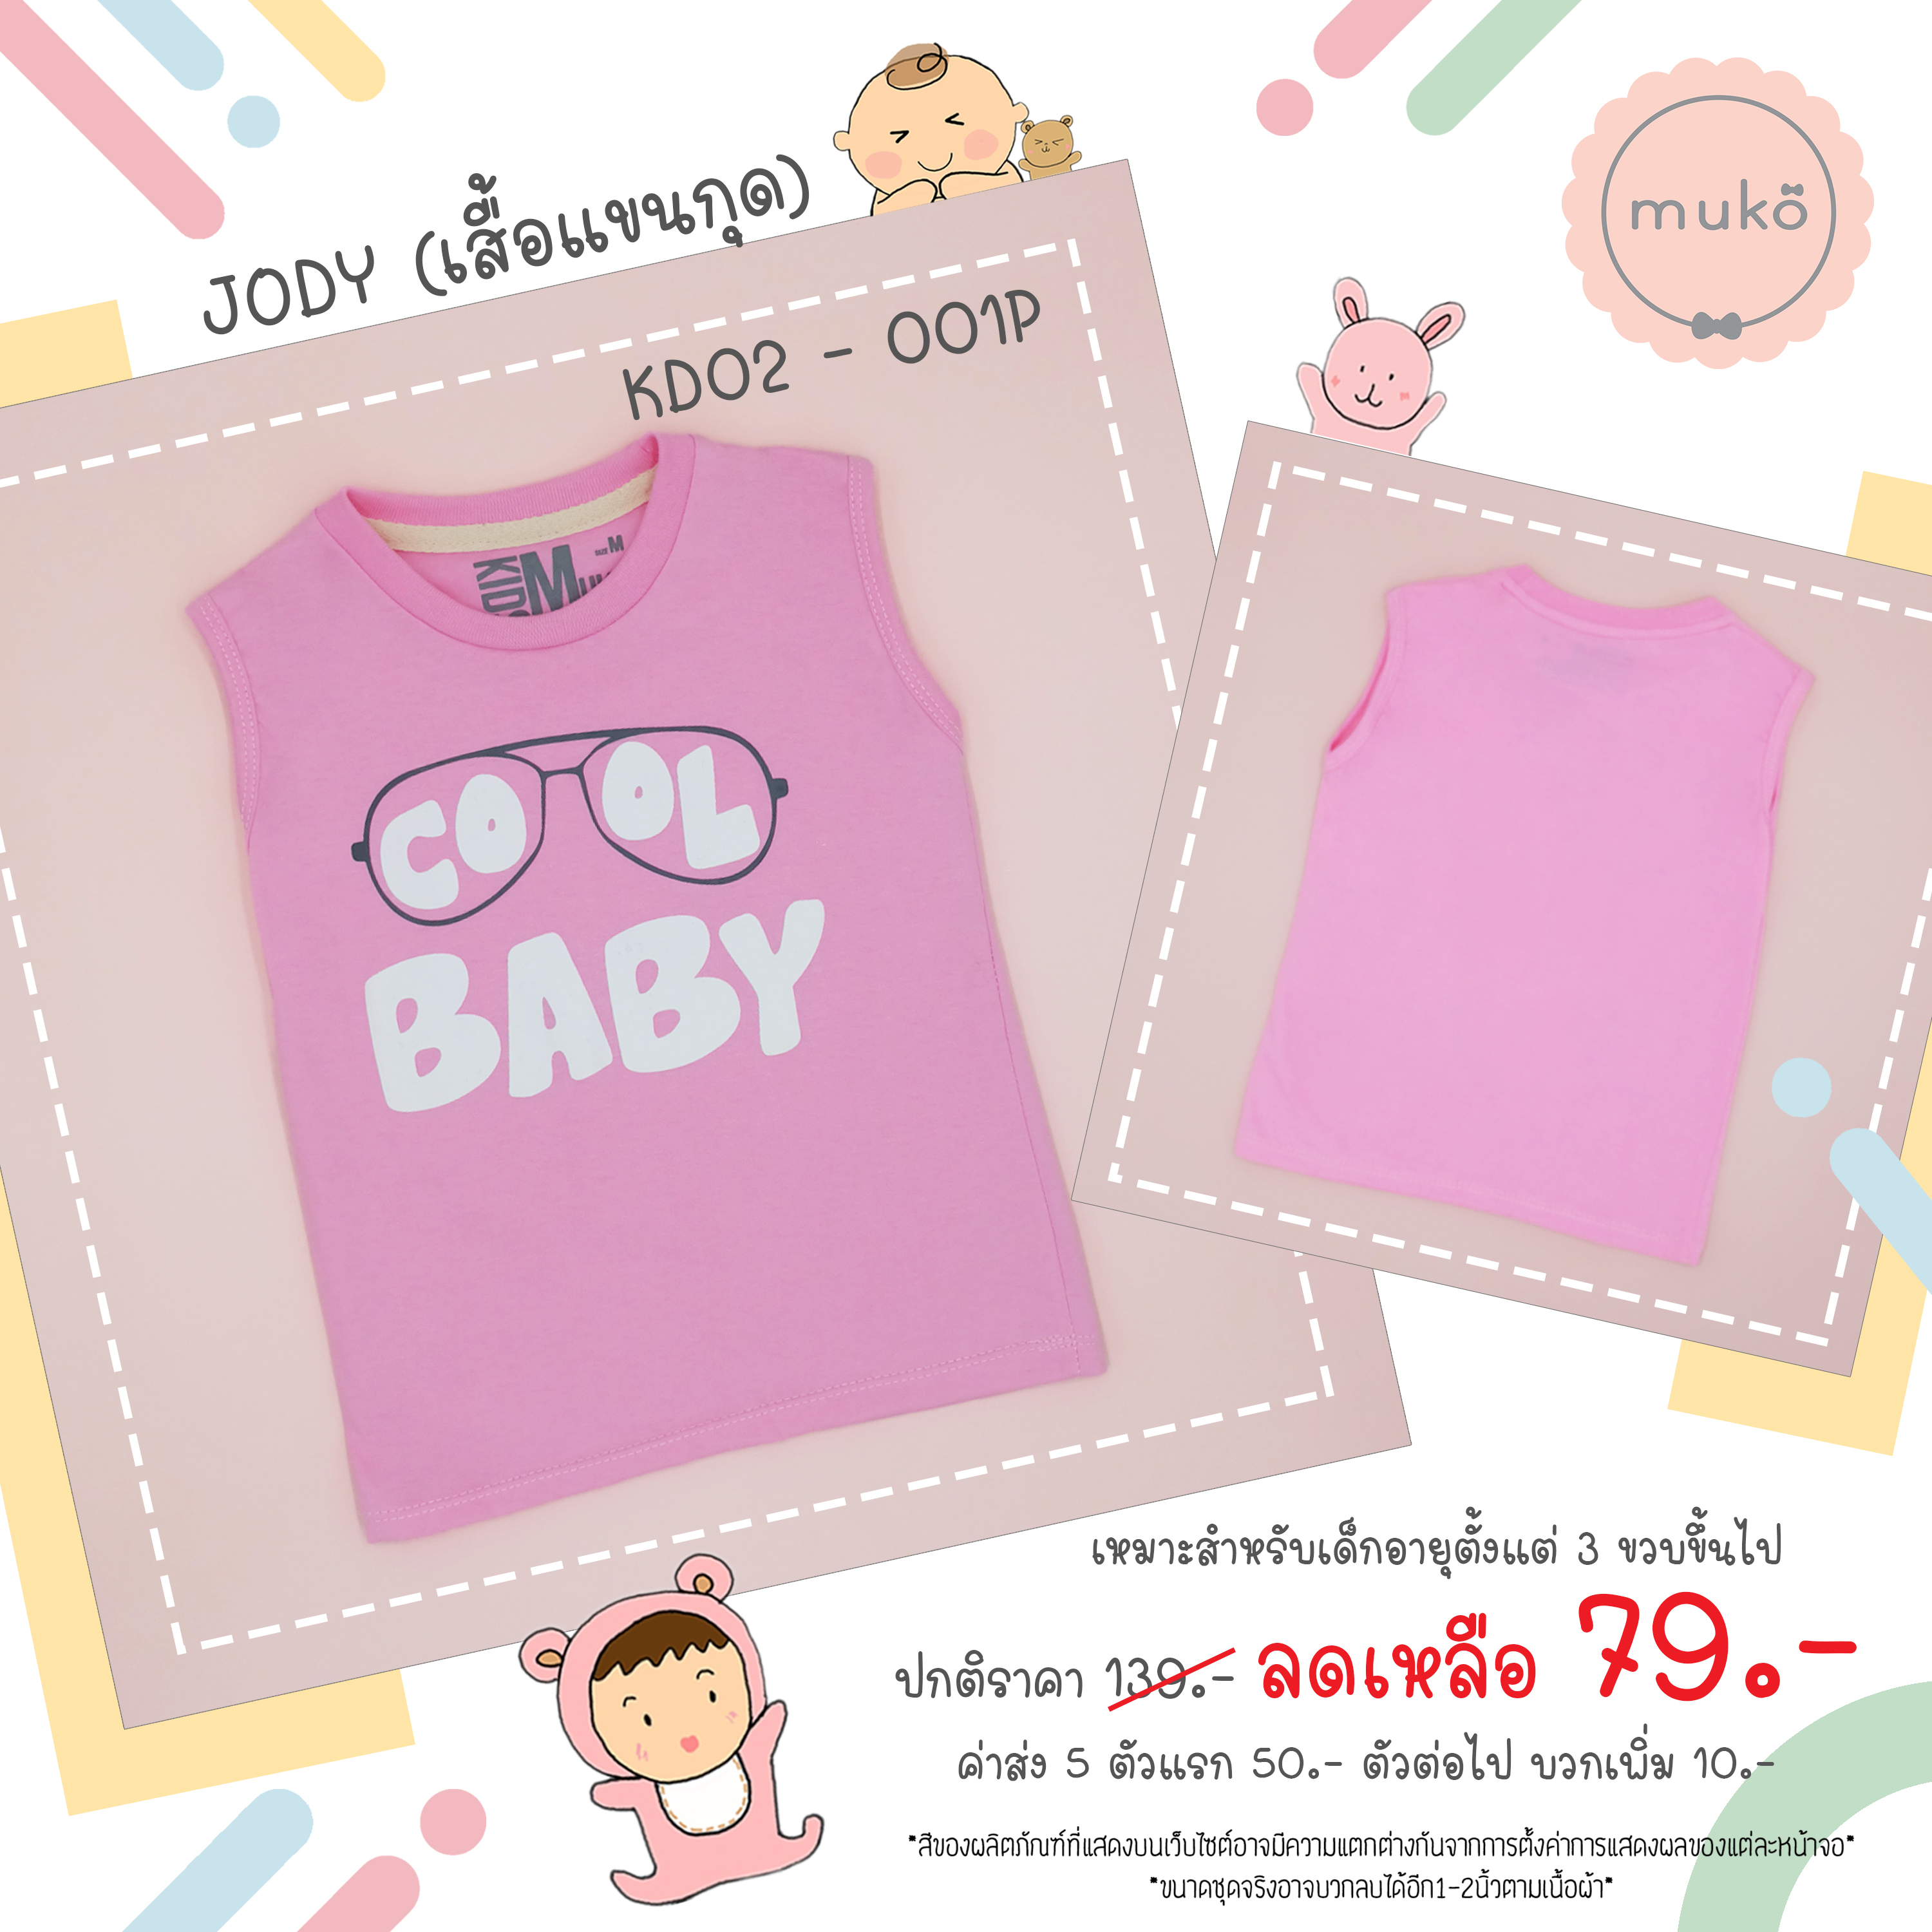 Muko Jody เสื้อเด็กเล็ก (แขนกุด) Size S KD02-001P S ลาย Cool baby สีชมพู